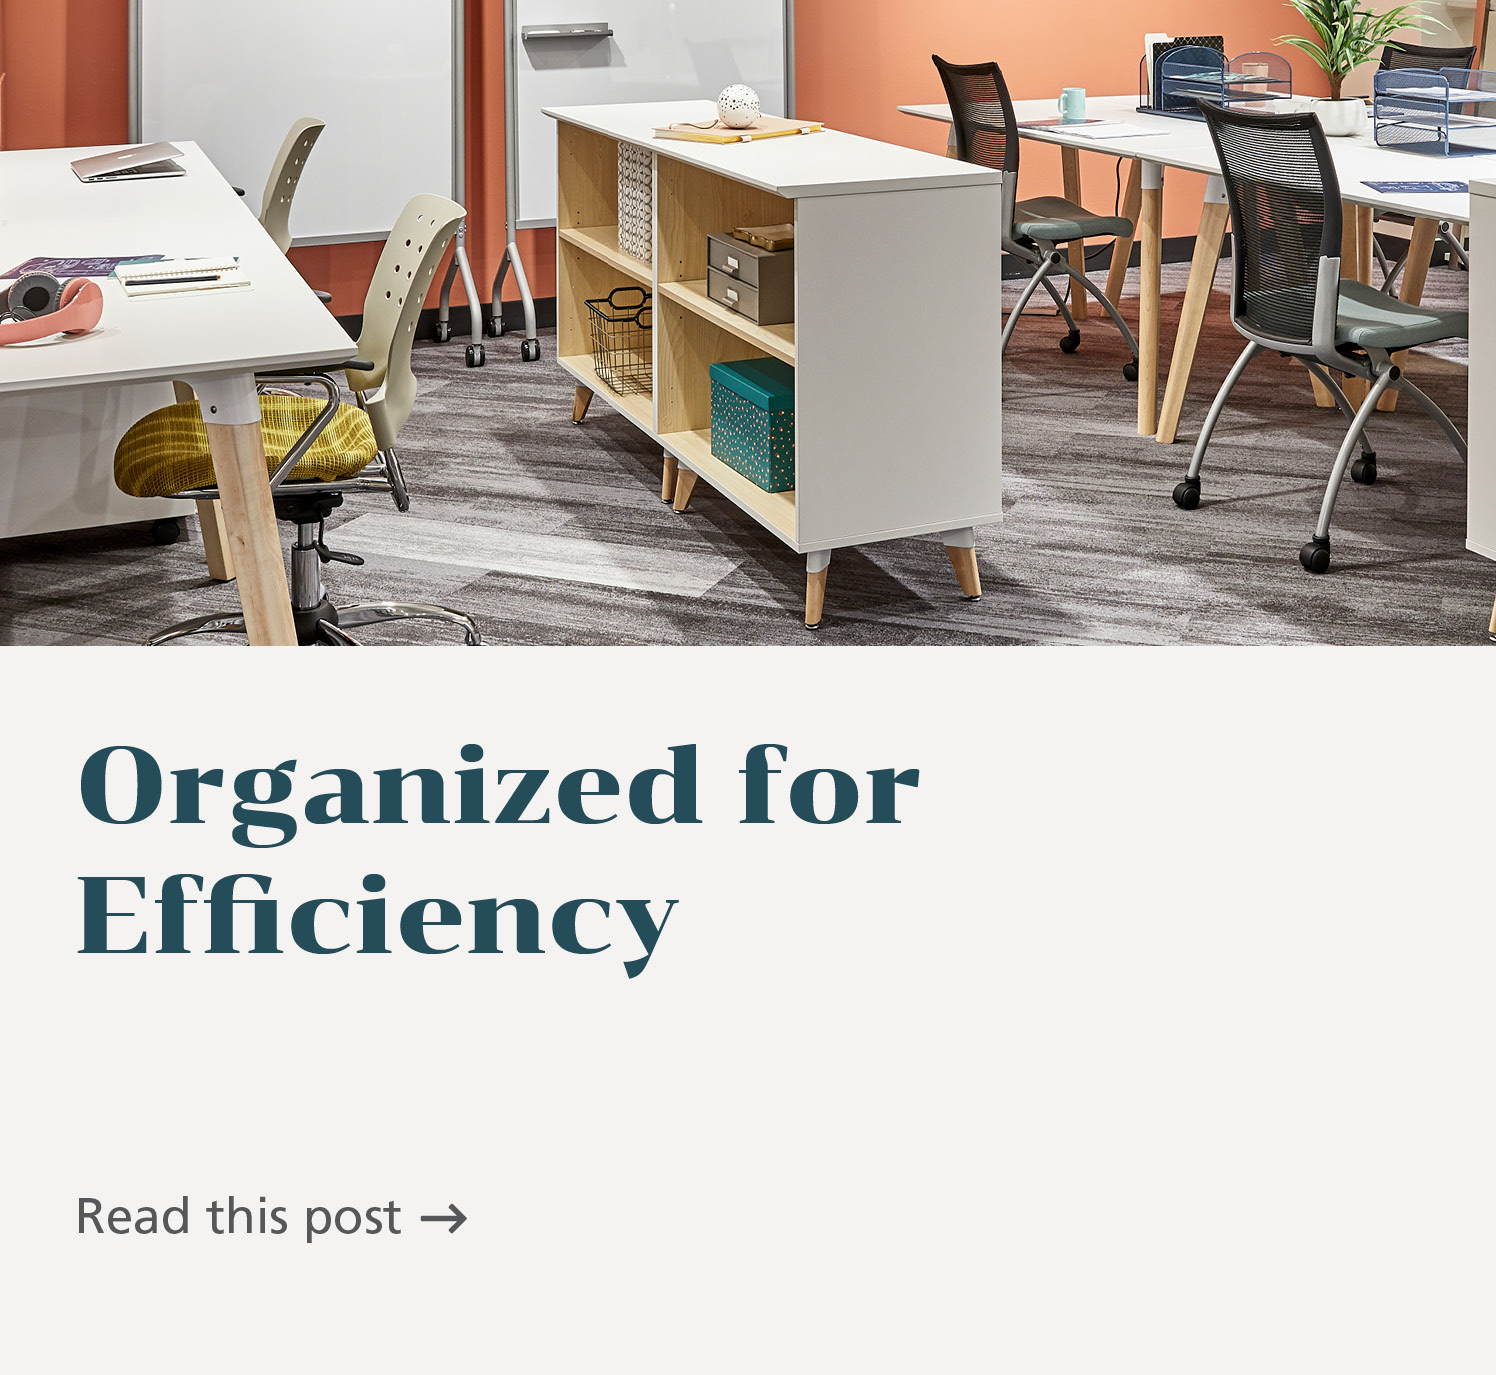 Organized for efficiency.